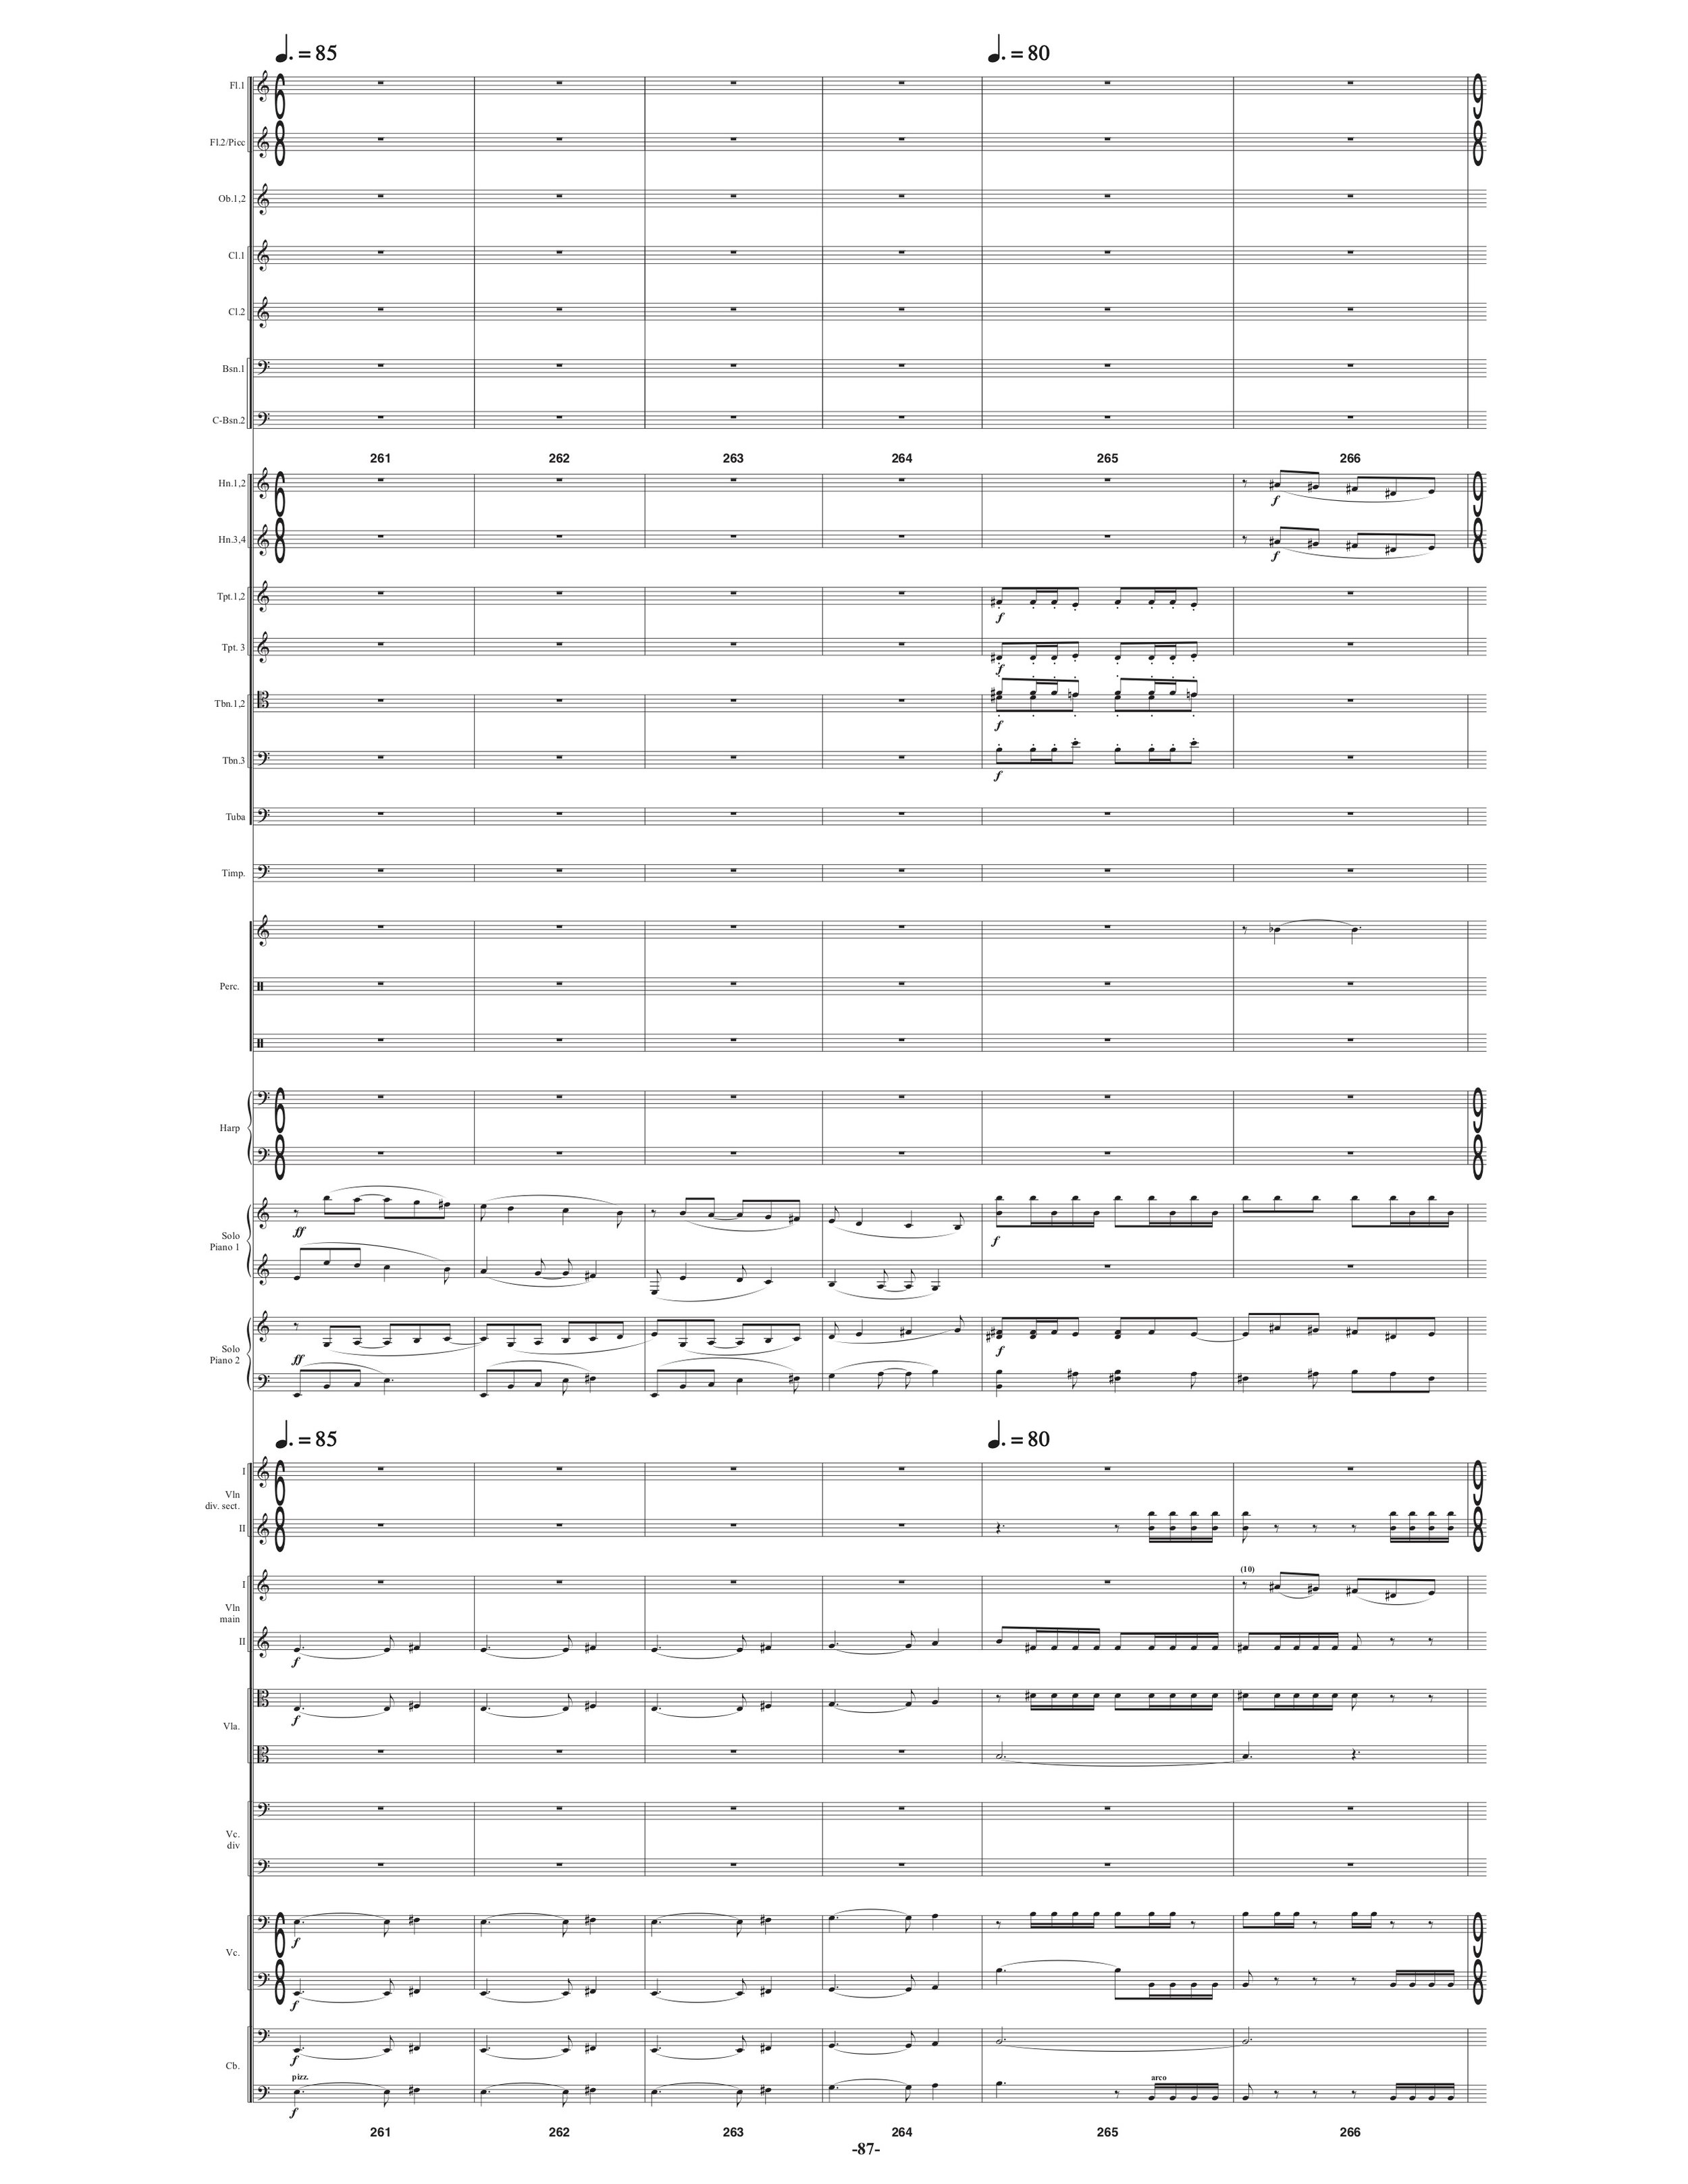 Symphony_Orch & 2 Pianos p92.jpg